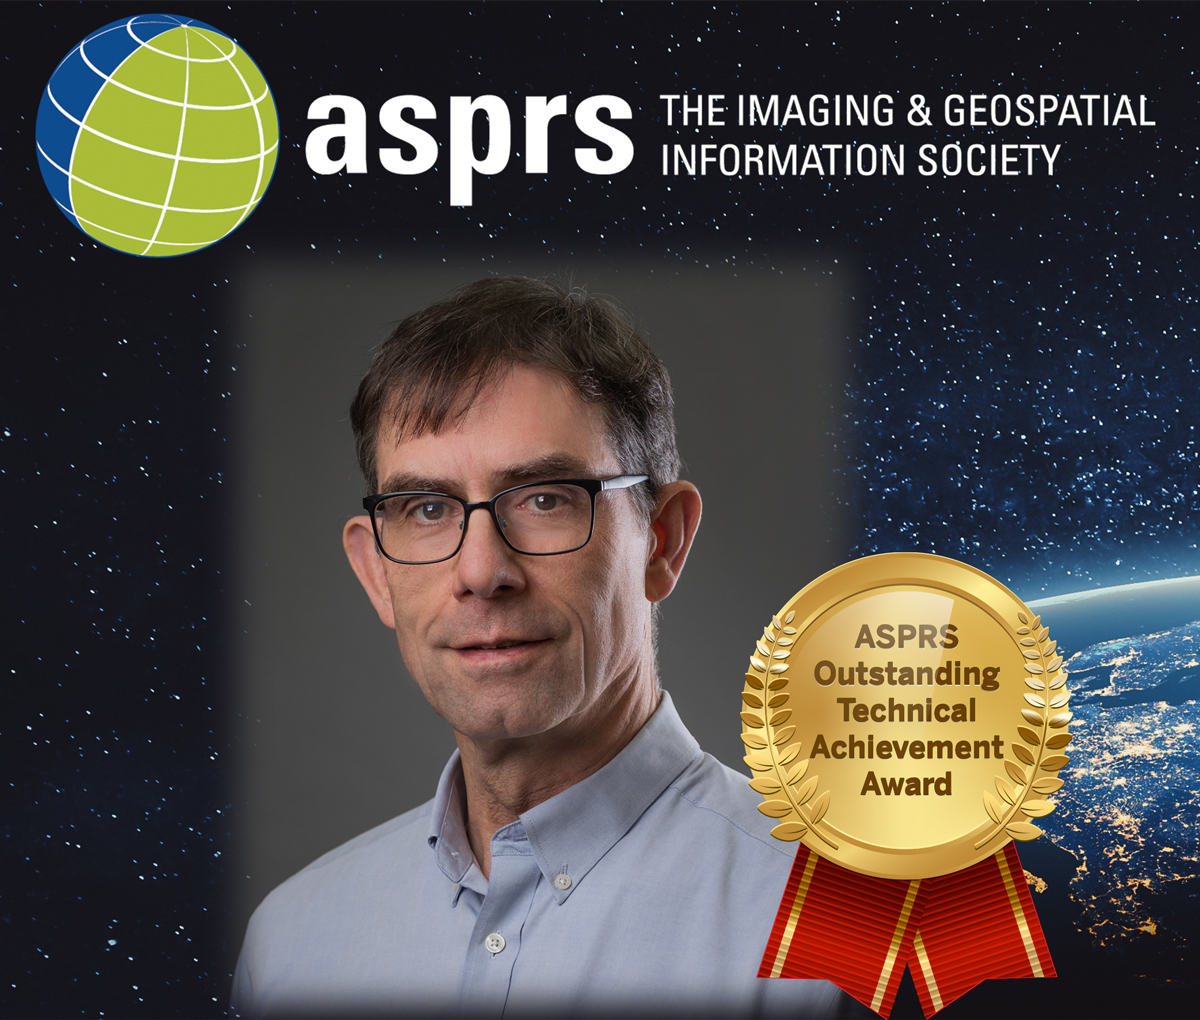 Trimble Applanix Receives ASPRS Outstanding Technical Achievement Award